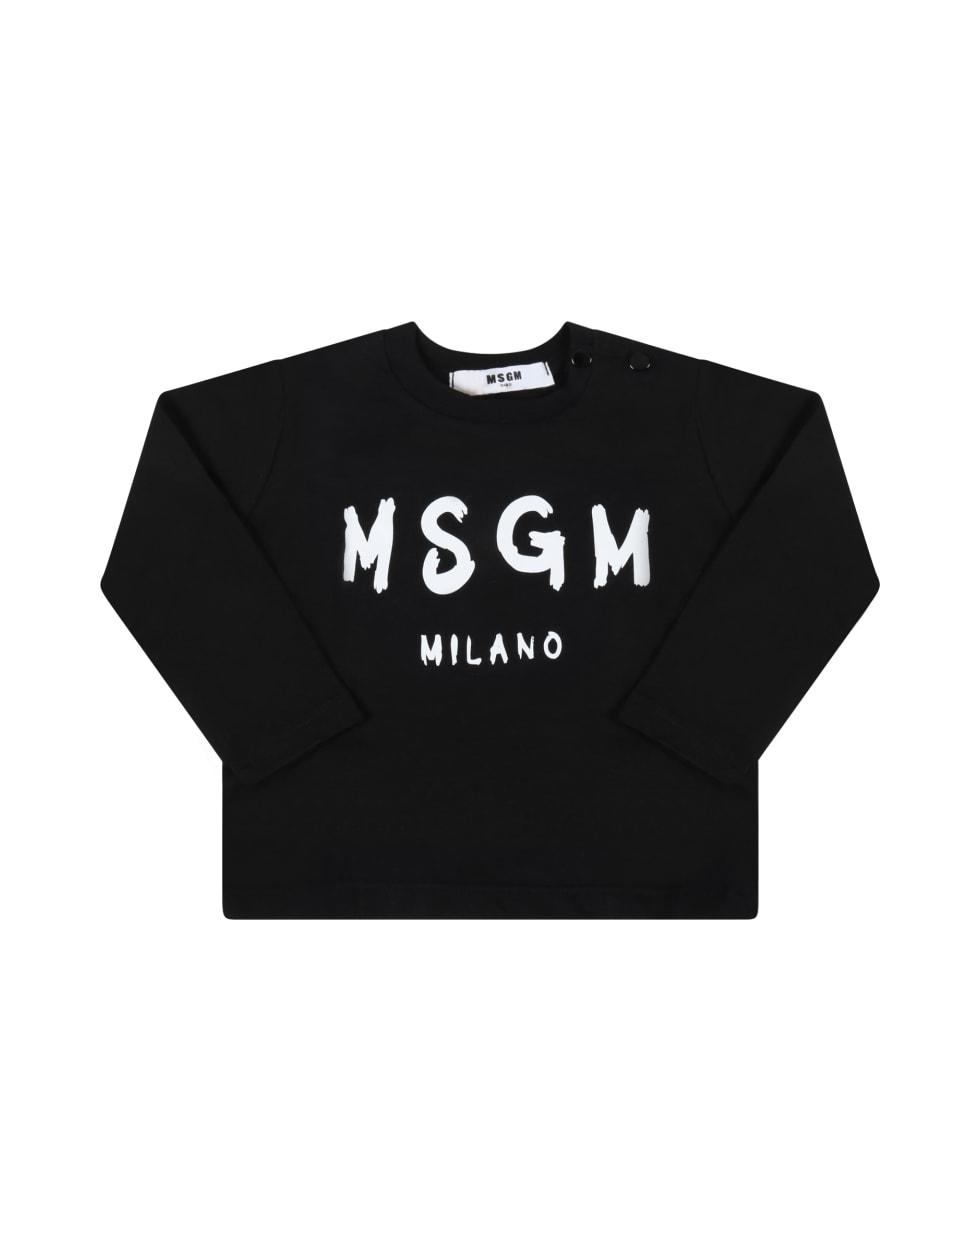 MSGM Black T-shirt For Babykids With Black Logo - Black